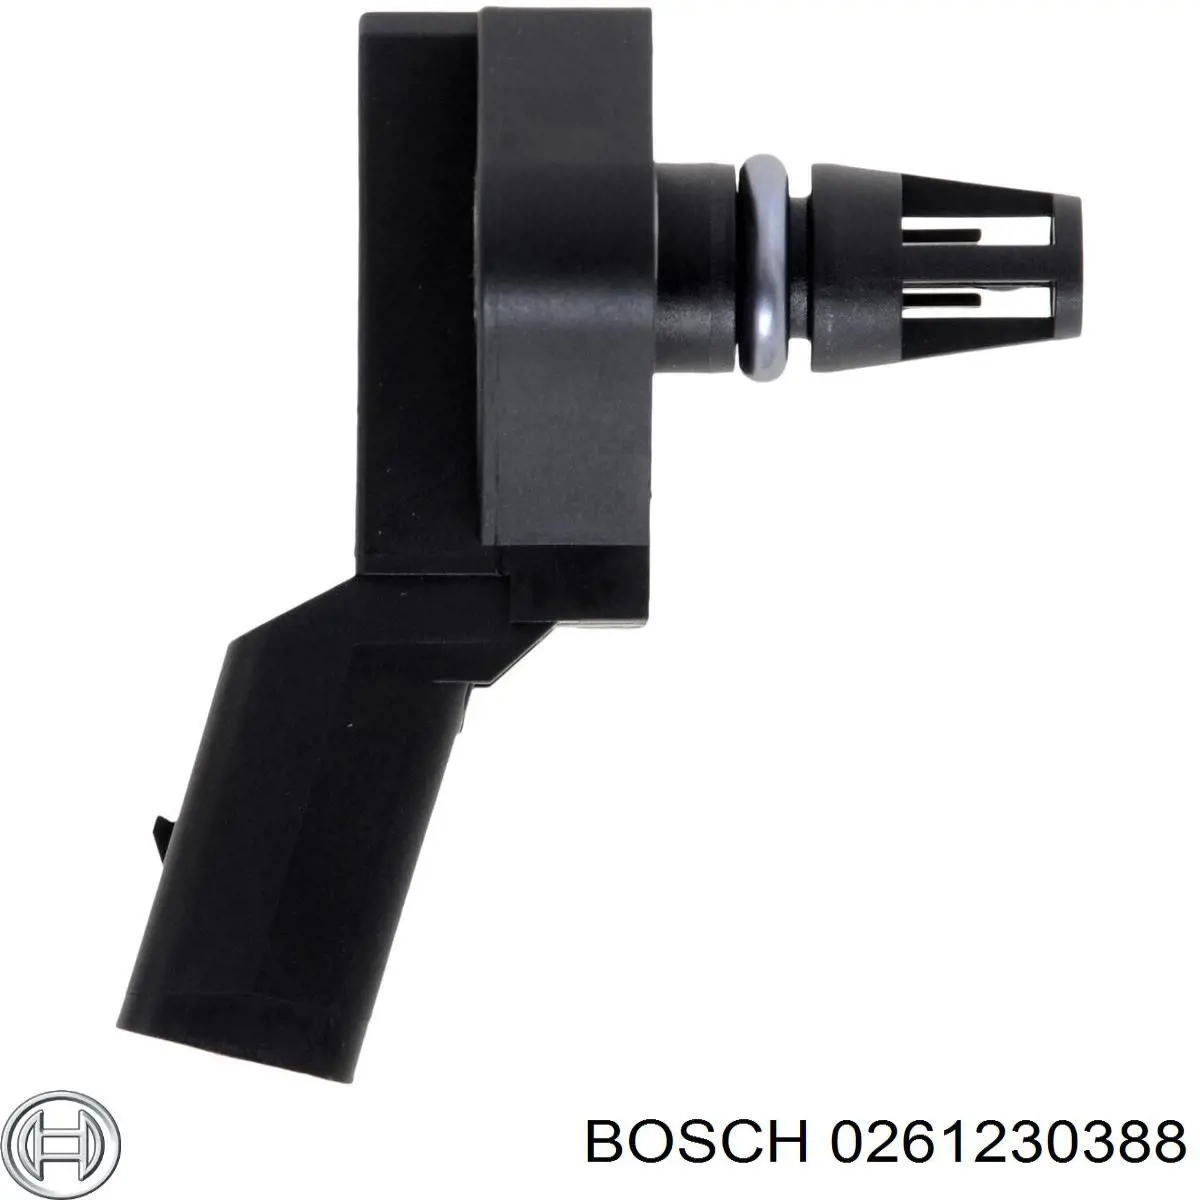 Sensor de presion de carga (inyeccion de aire turbina) 0261230388 Bosch